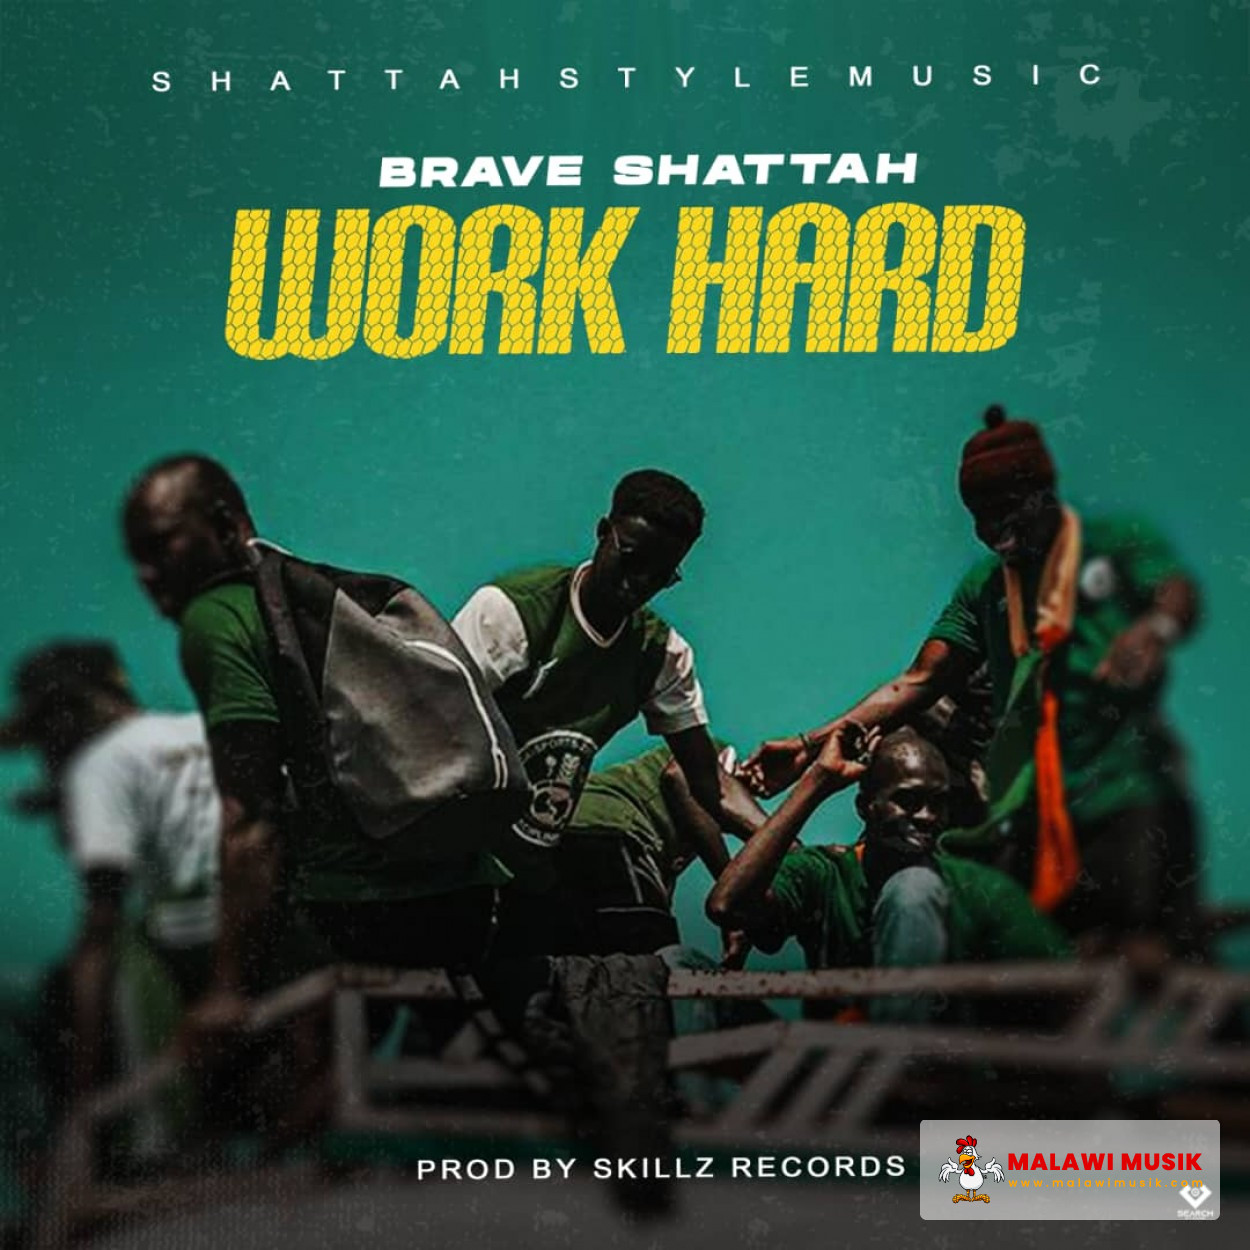 Brave Shattah - Word Hard (Prod. Skillz Records)